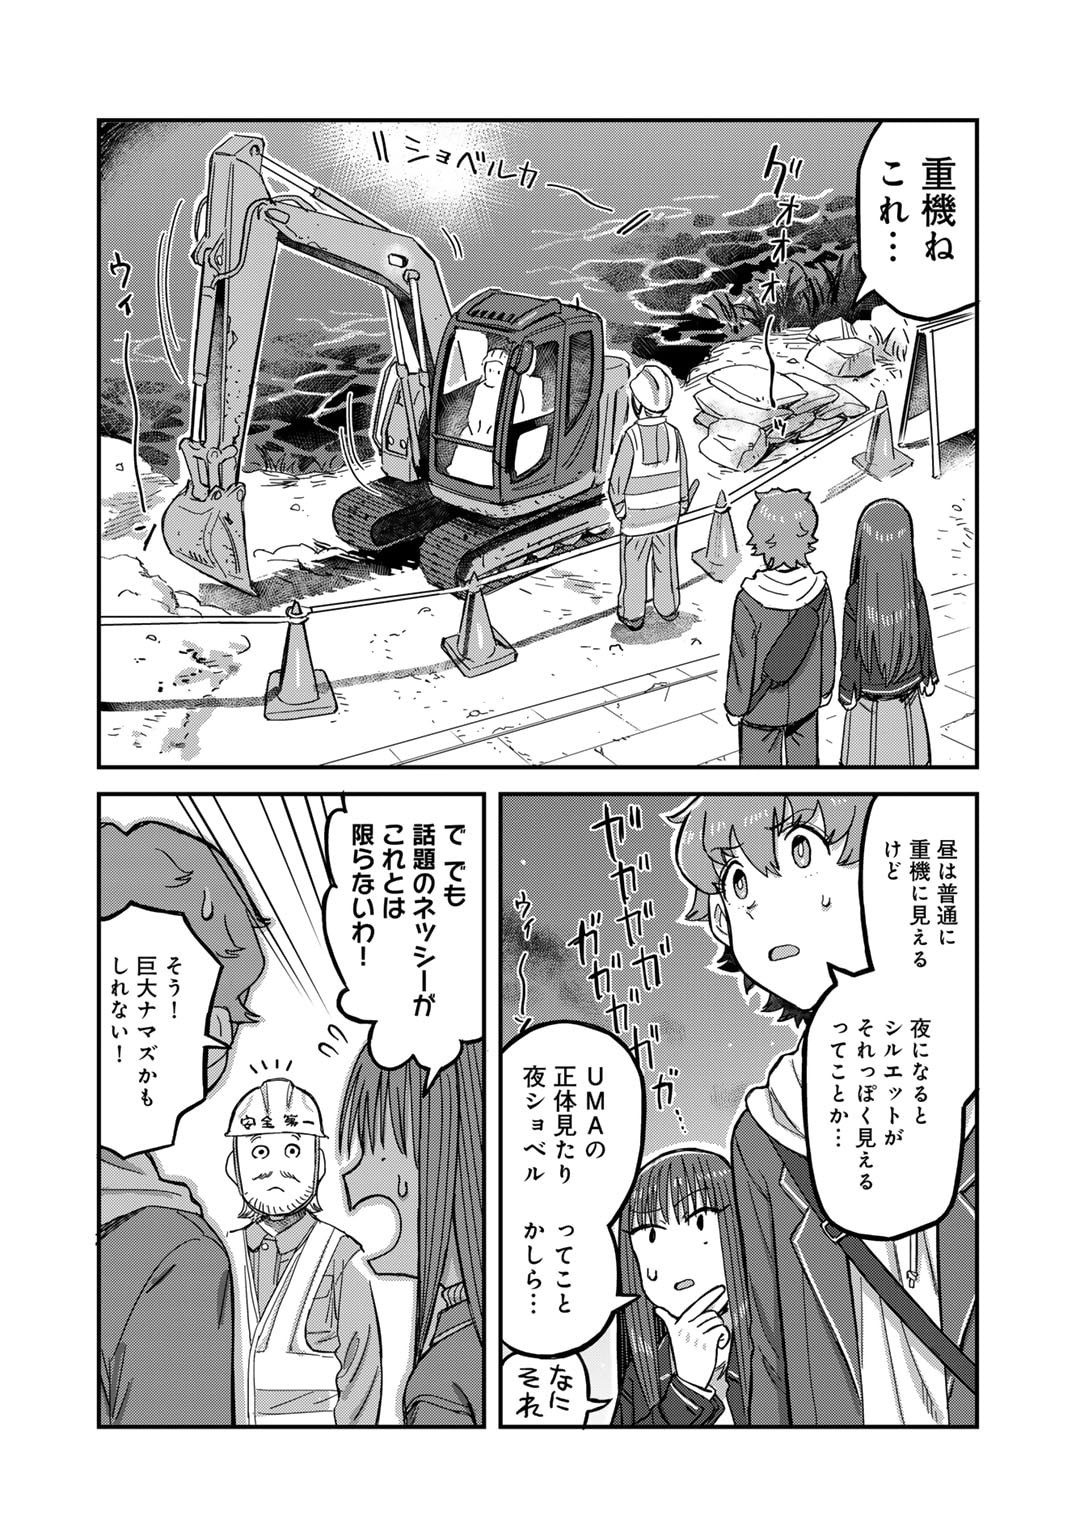 Kurono-san wa Occult ga Suki! - Chapter 5 - Page 14